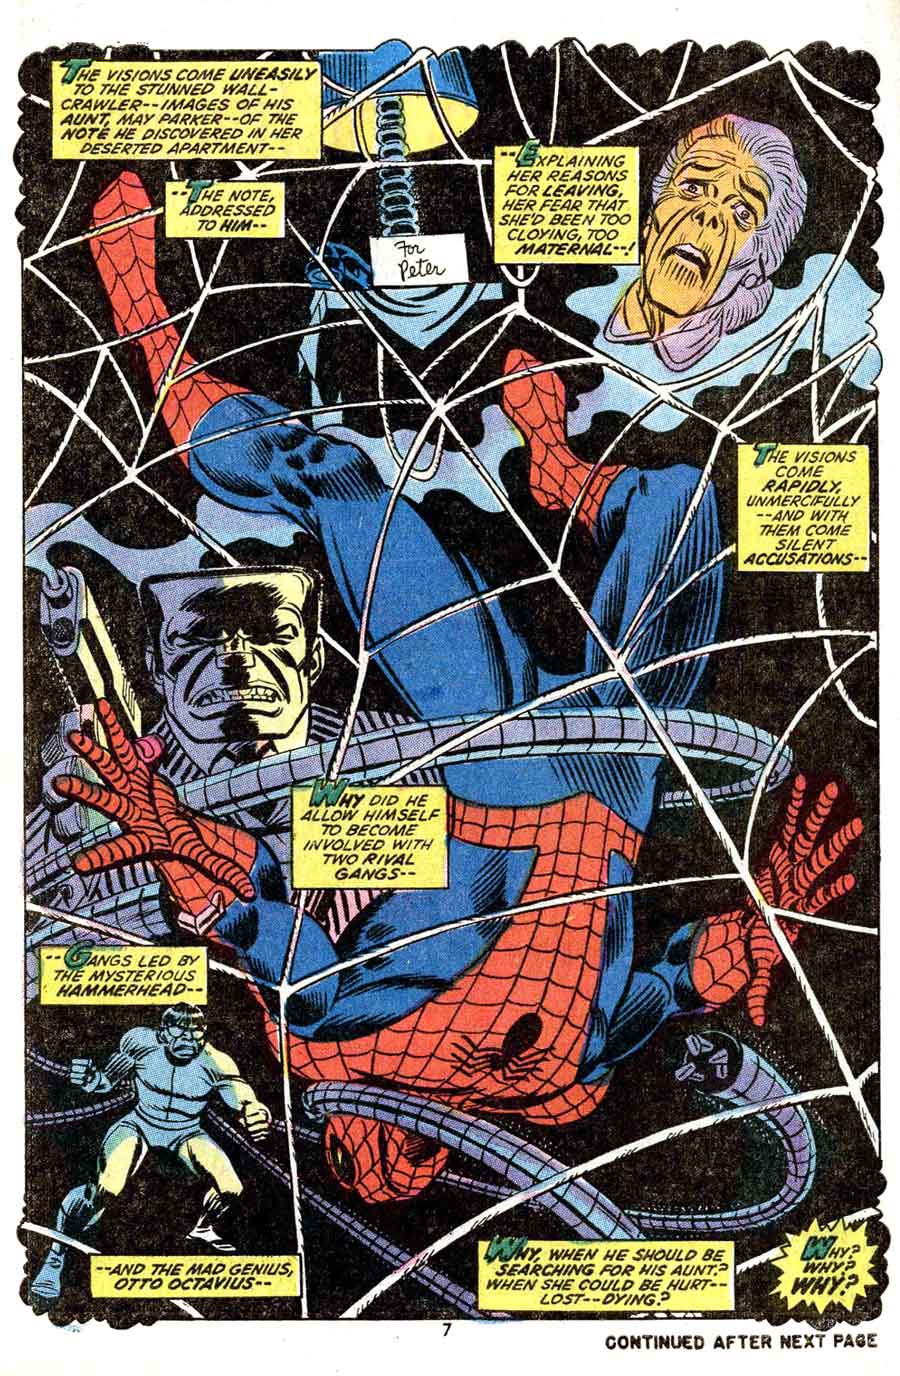 Amazing Spider-Man #114 JimStarlin bronze age marvel comic book page